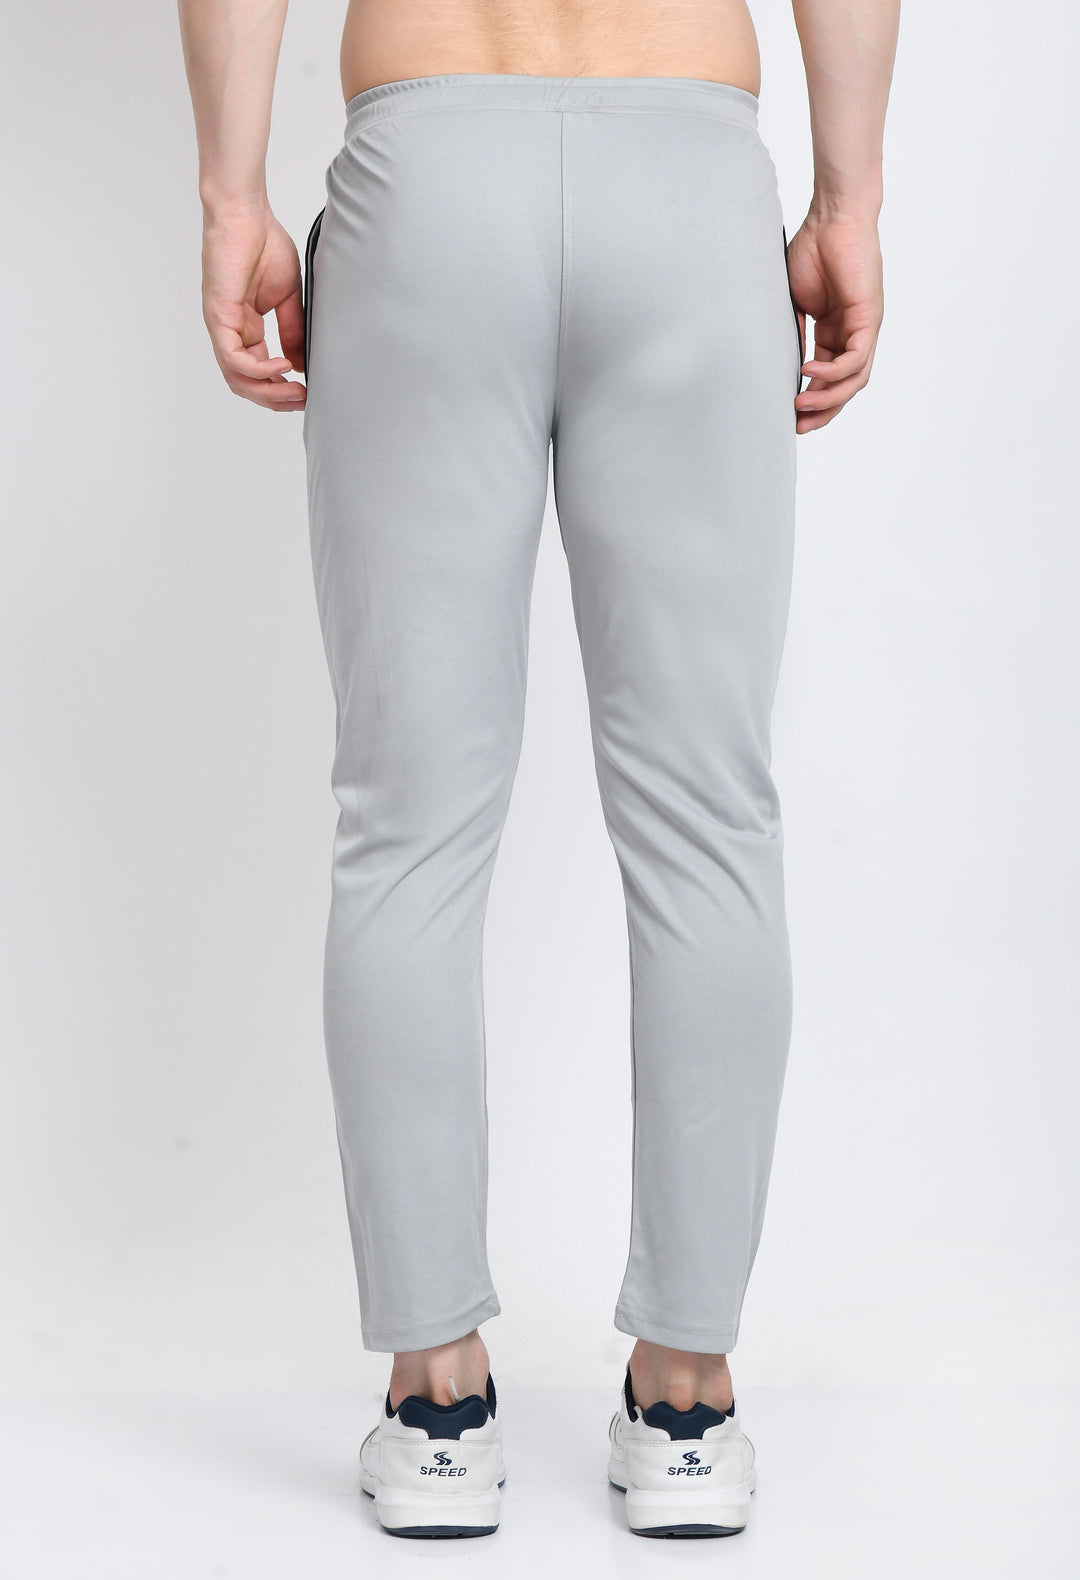 Men Colorblock Grey Sports Track Pants (Pack of 1)